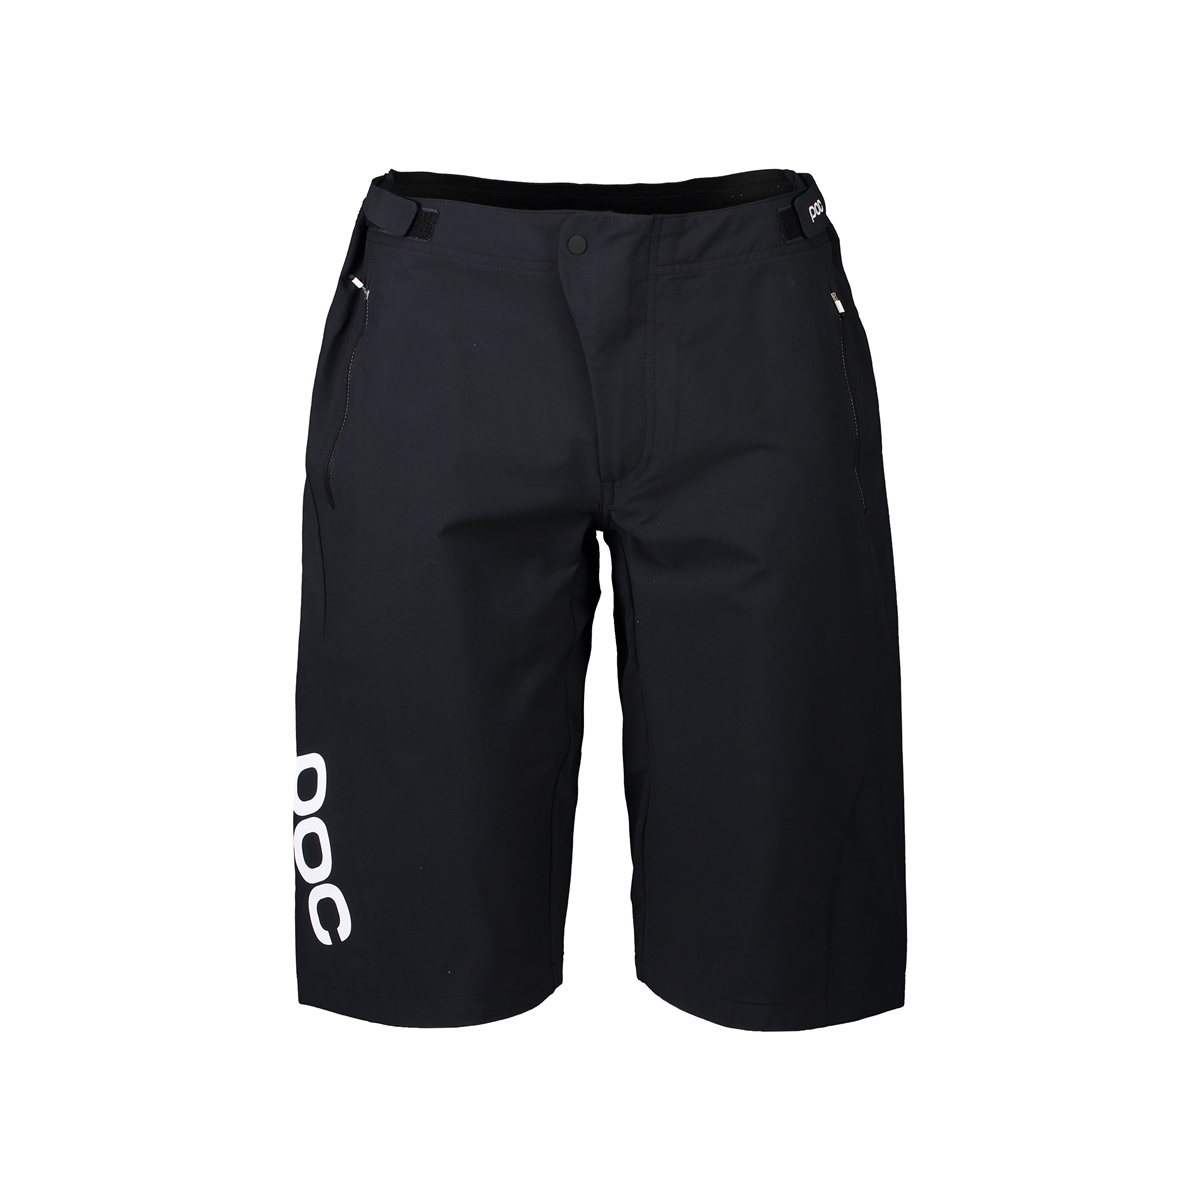 Essential Enduro Shorts black size L